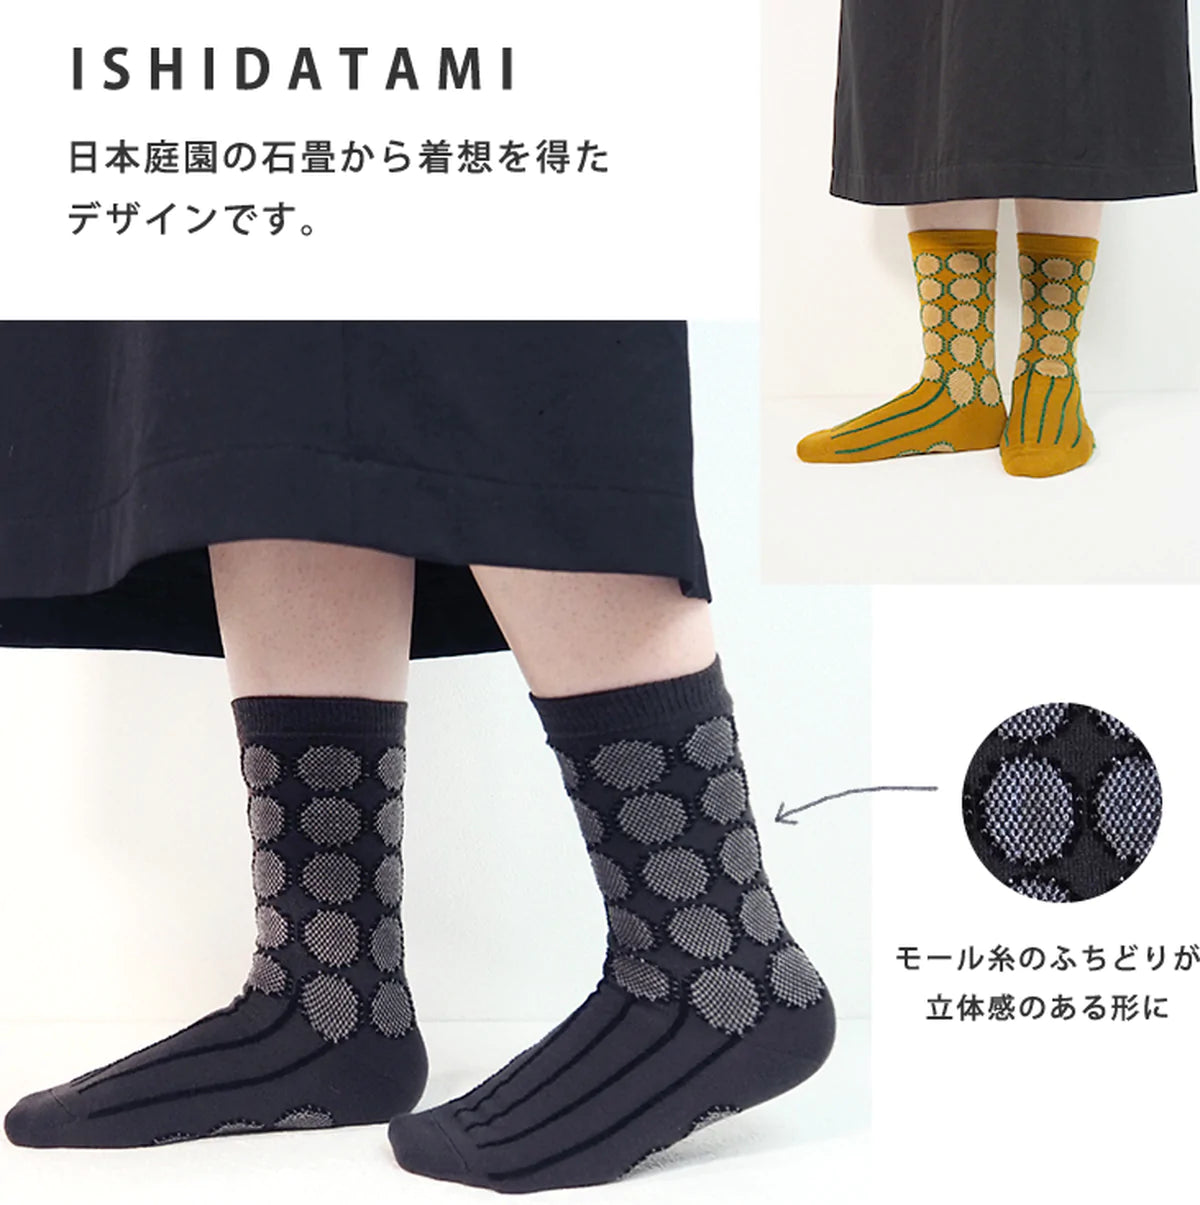 【andè 】ISHIDATAMI Charcoal grey middle gauge socks